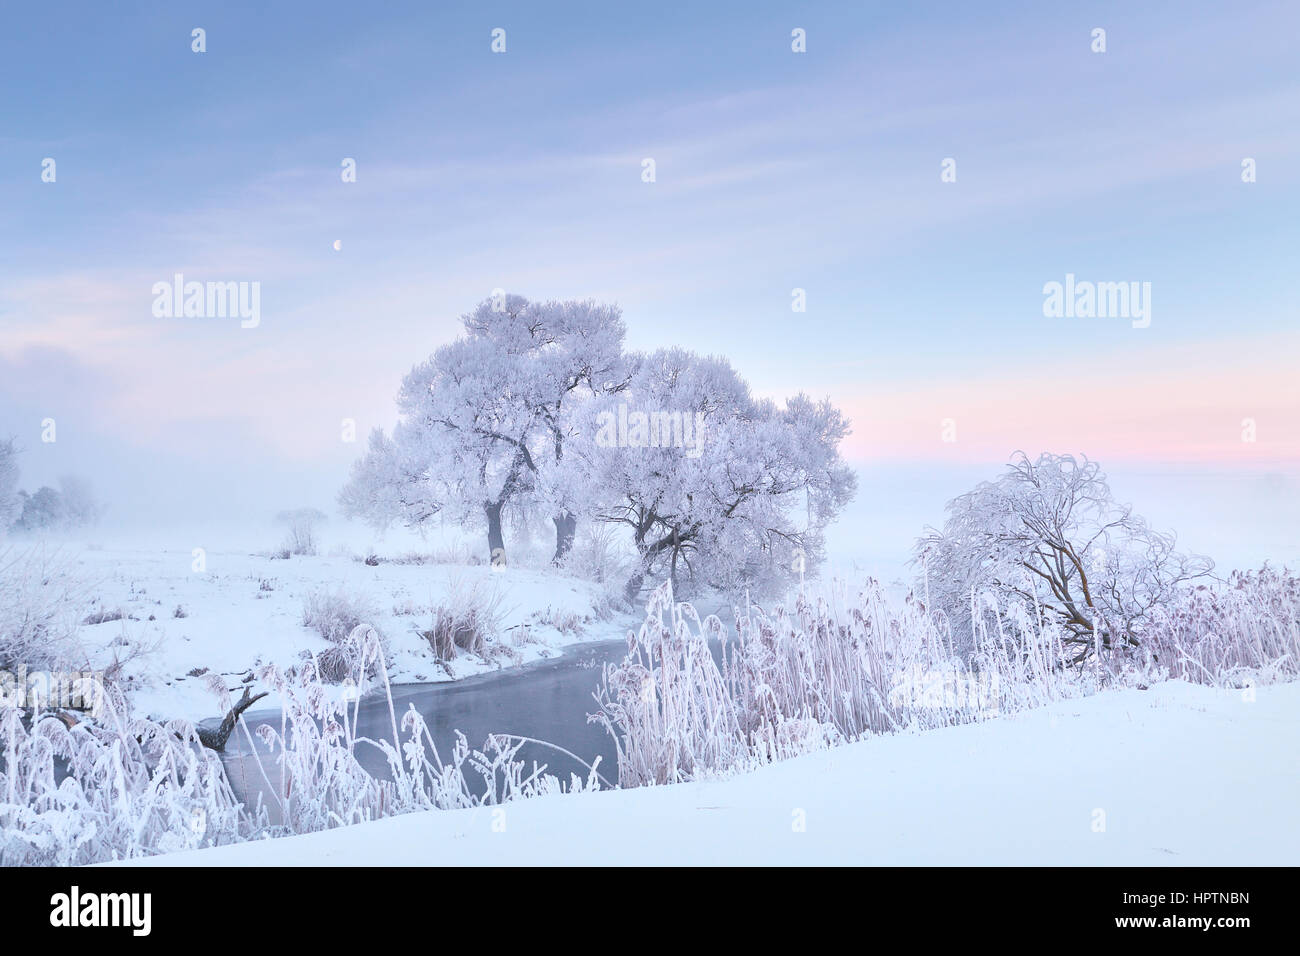 Frosty winter morning. Xmas winter landscape. Trees with hoarfrost in snowy field. Stock Photo